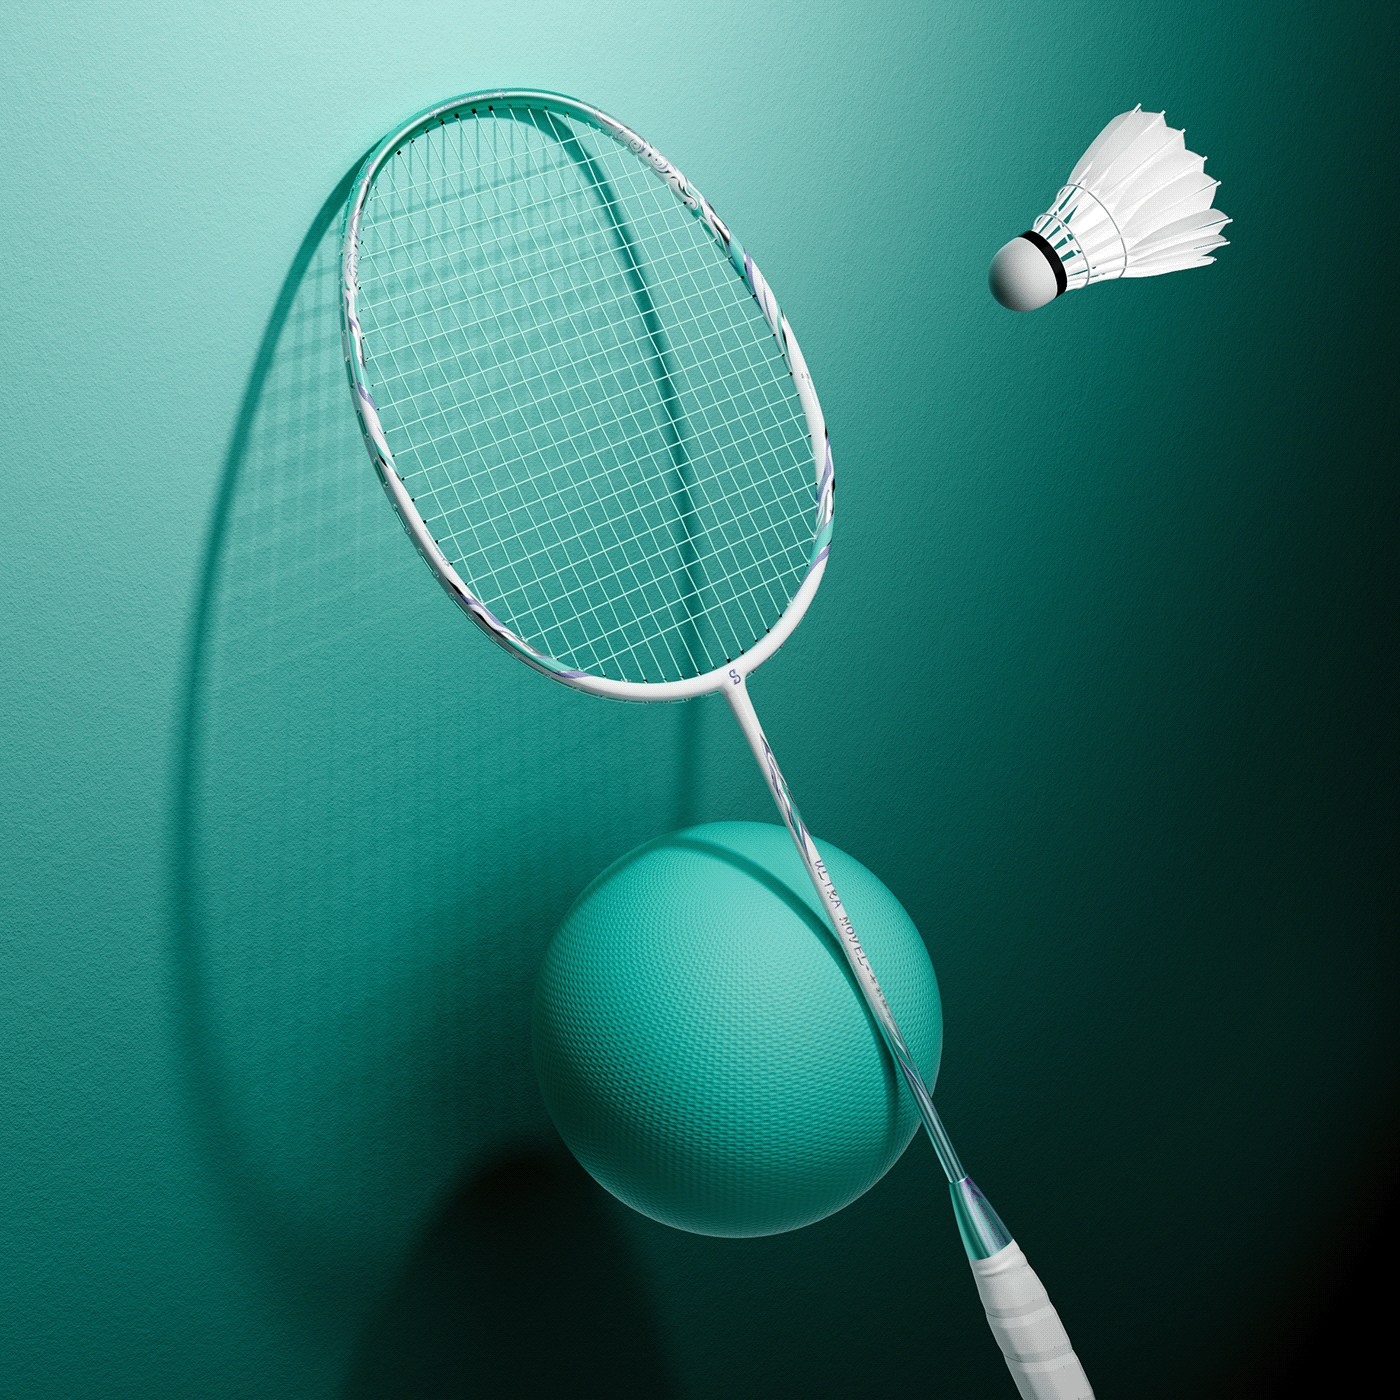 movement Render design Graphic Designer Social media post badminton racket